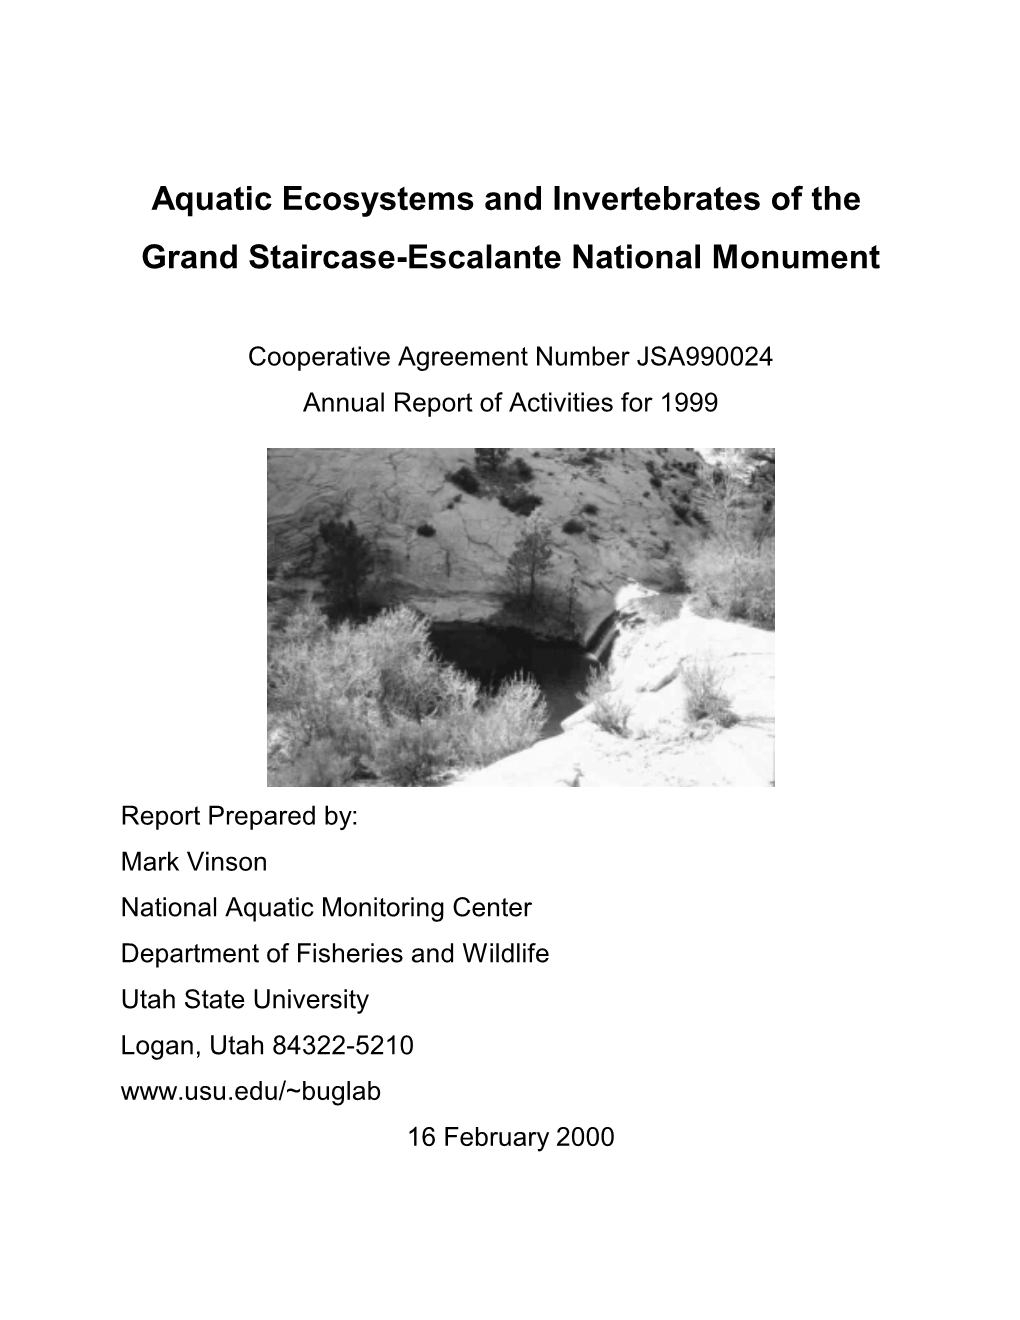 Aquatic Ecosystems and Invertebrates of the Grand Staircase-Escalante National Monument